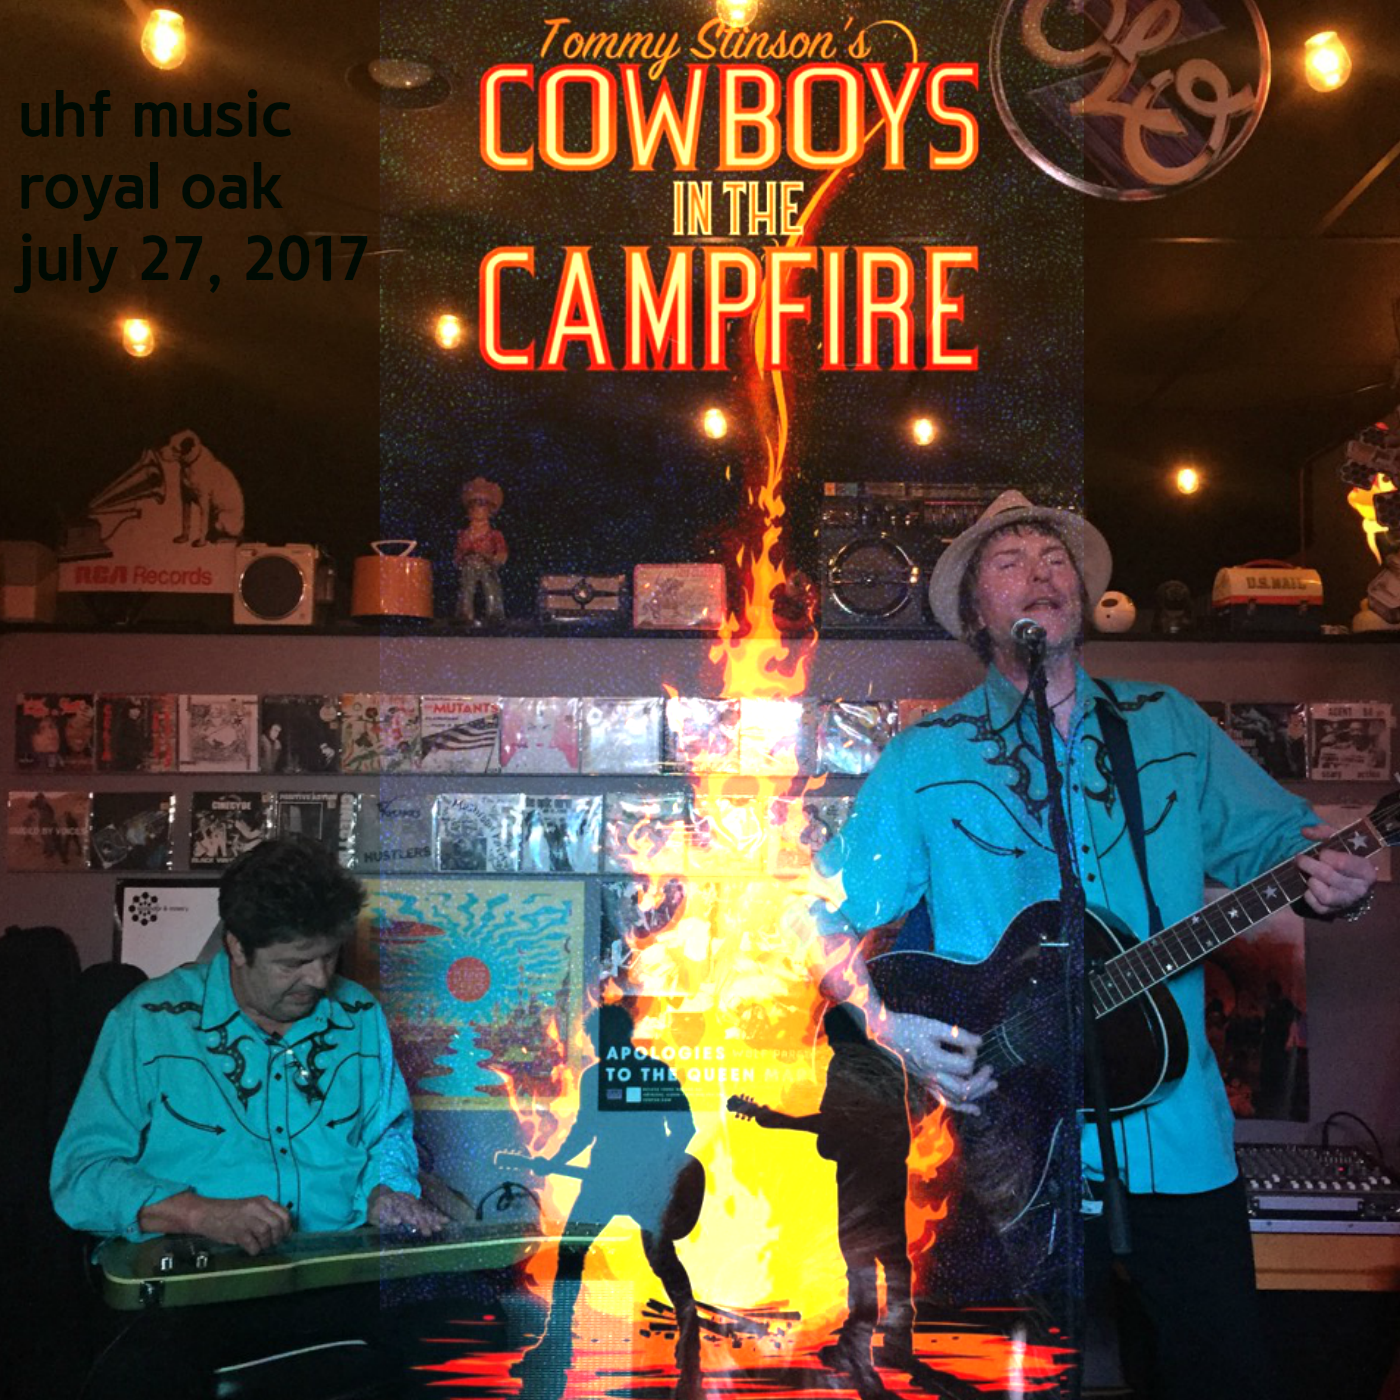 CowboysInTheCampfire2017-07-27UHFMusicRoyalOakMI (1).png